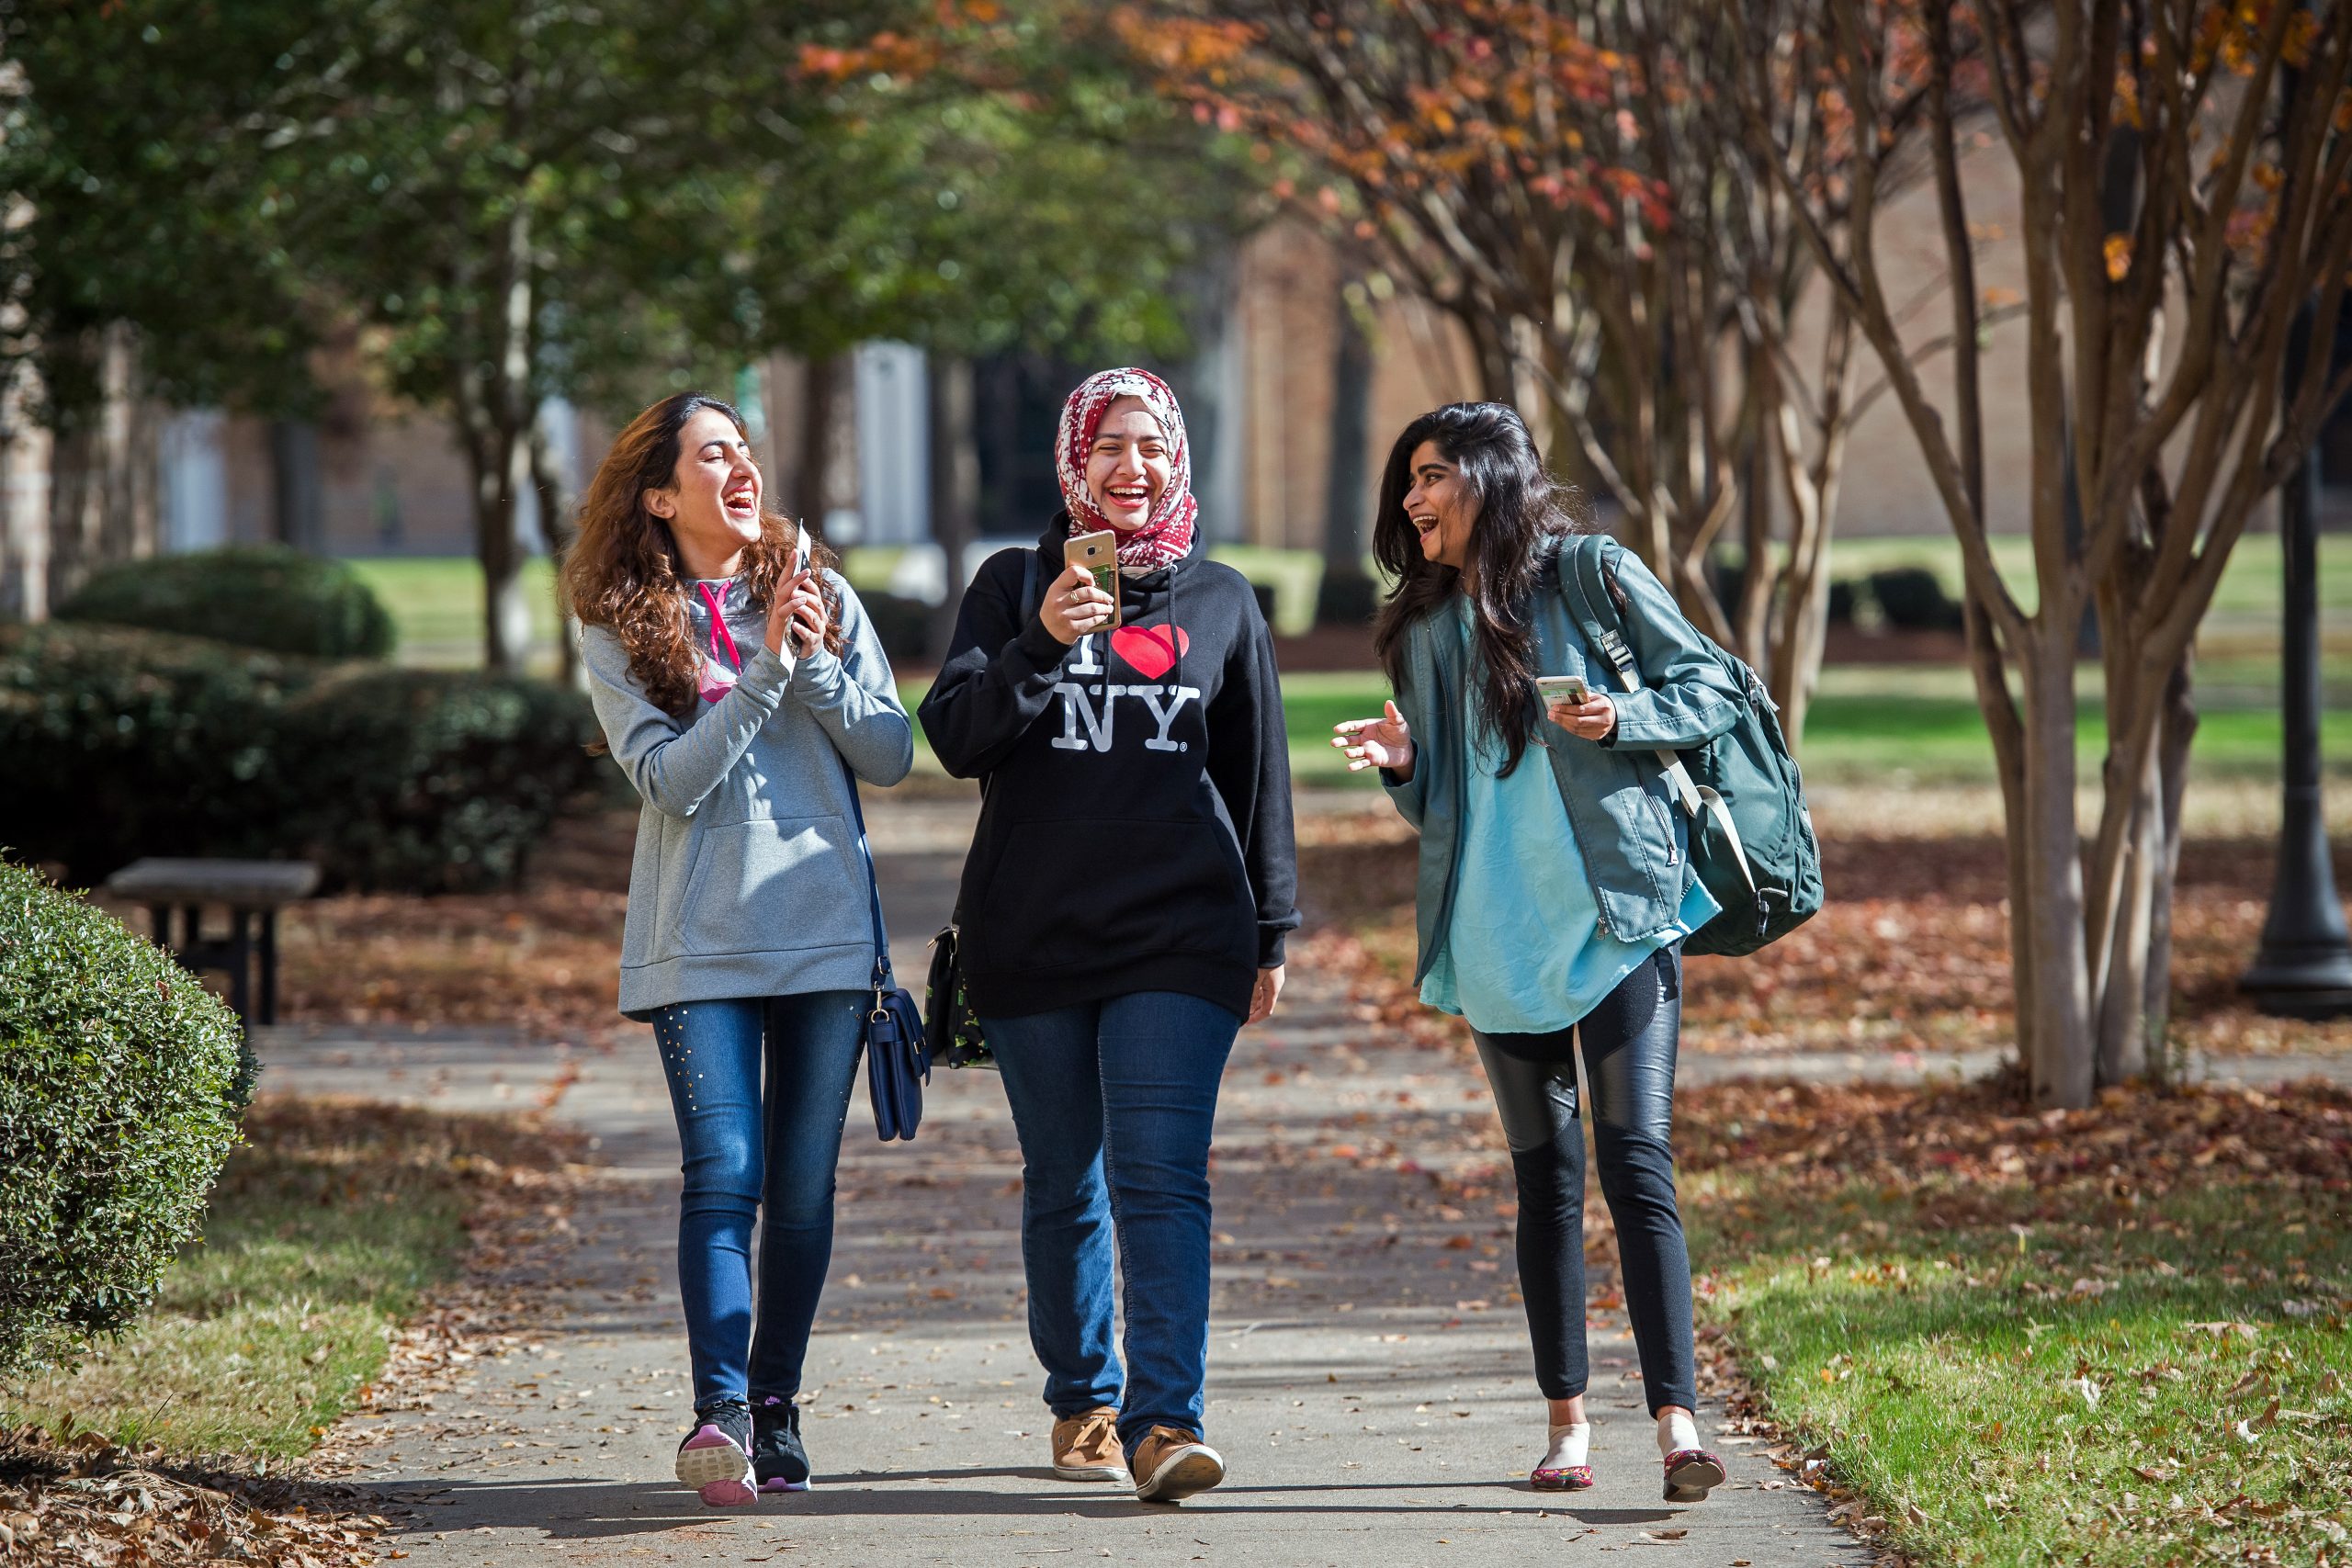 3 International students walking and having fun on campus.